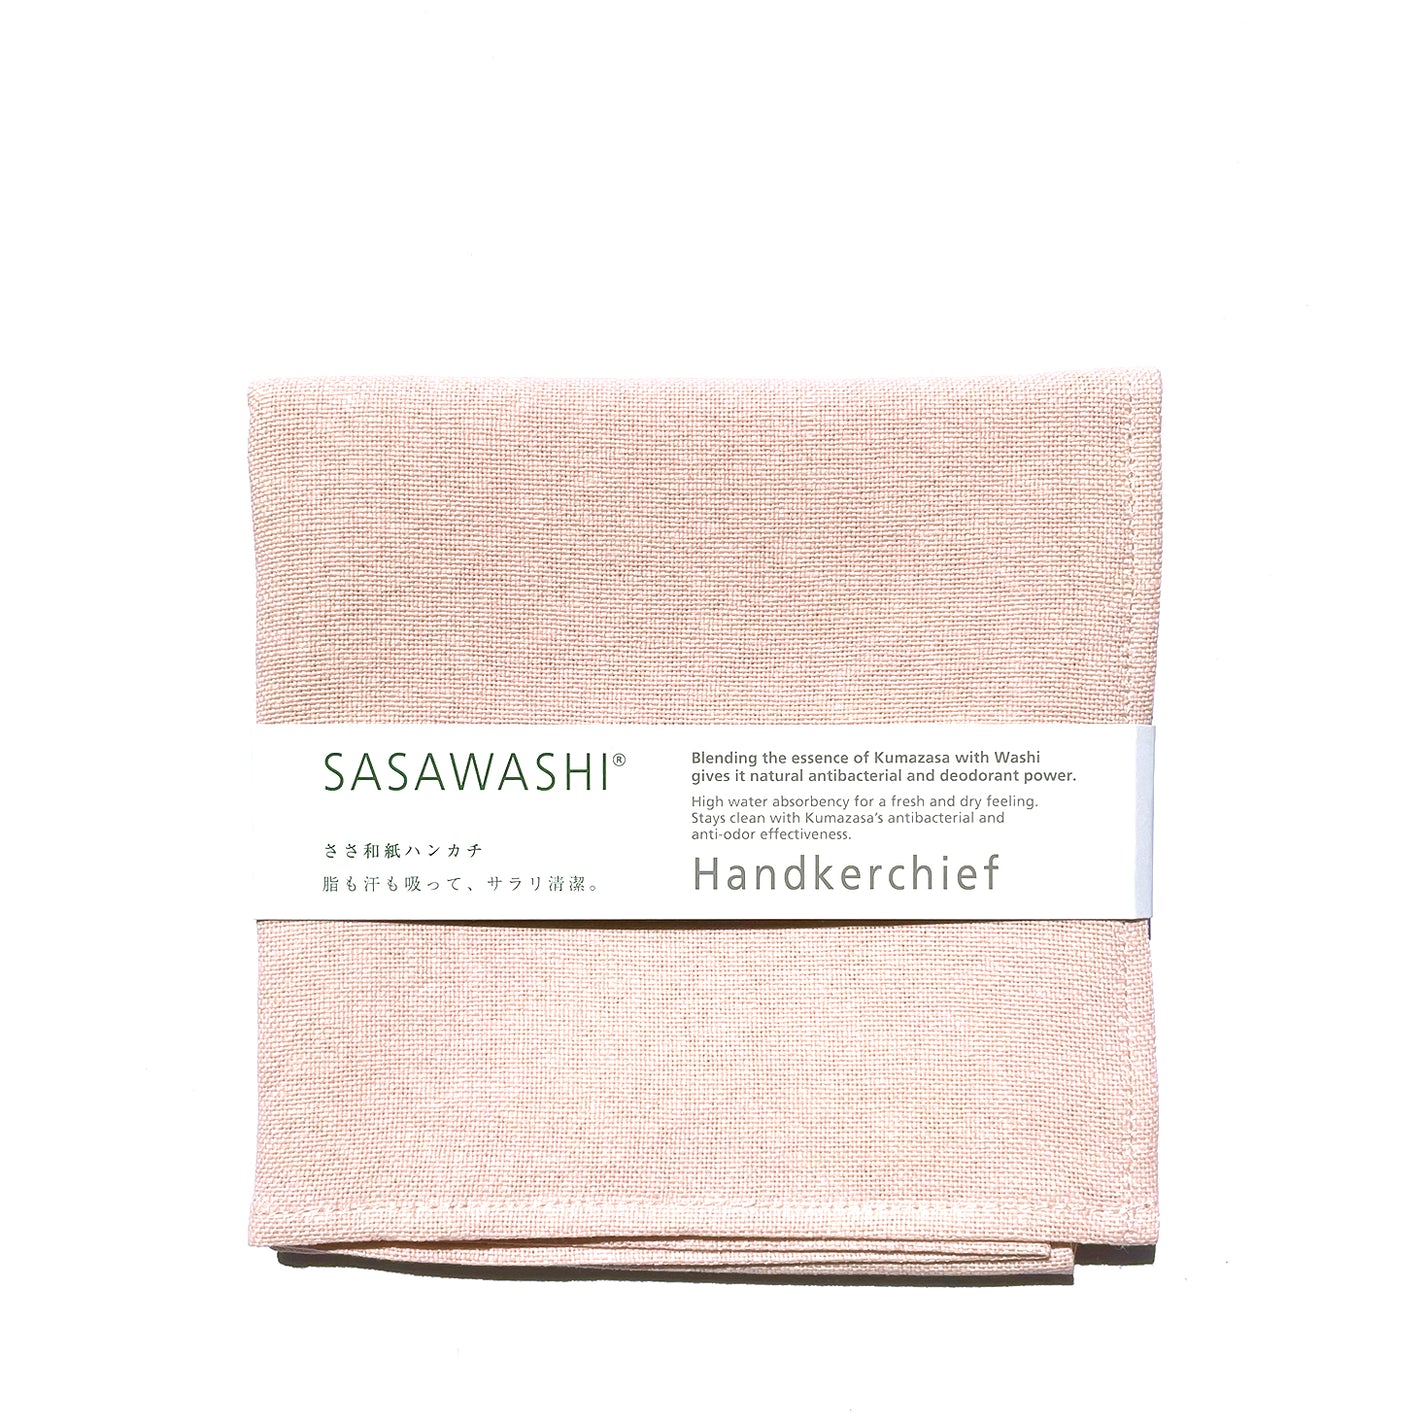 Sasawashi Handkerchief - Pink